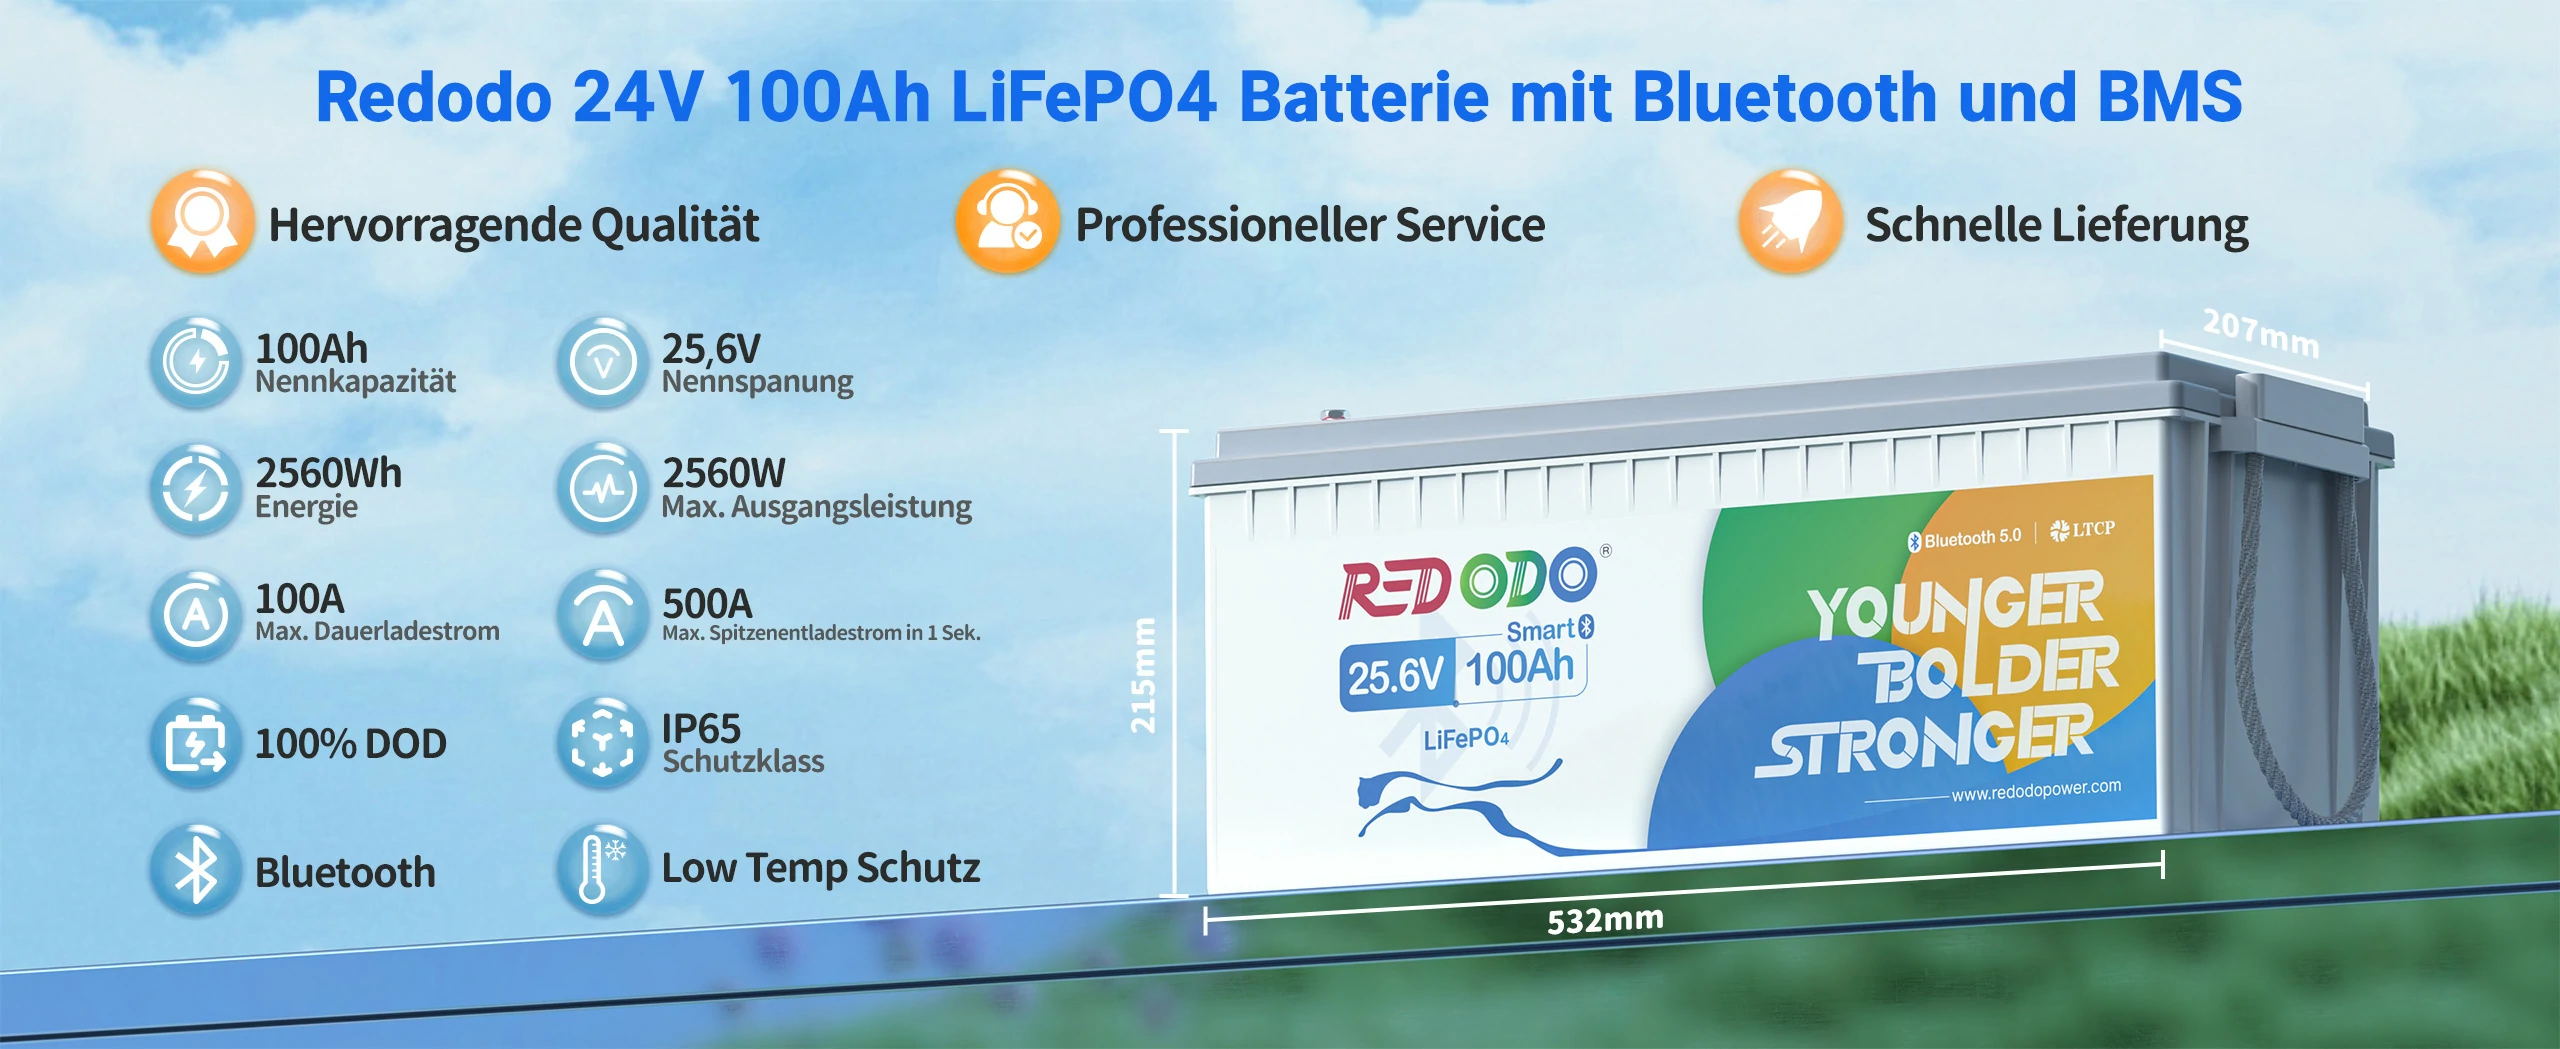 Redodo-LiFePO4-24V-100Ah-Solarbatterie-mit-Bluetooth-Parameter